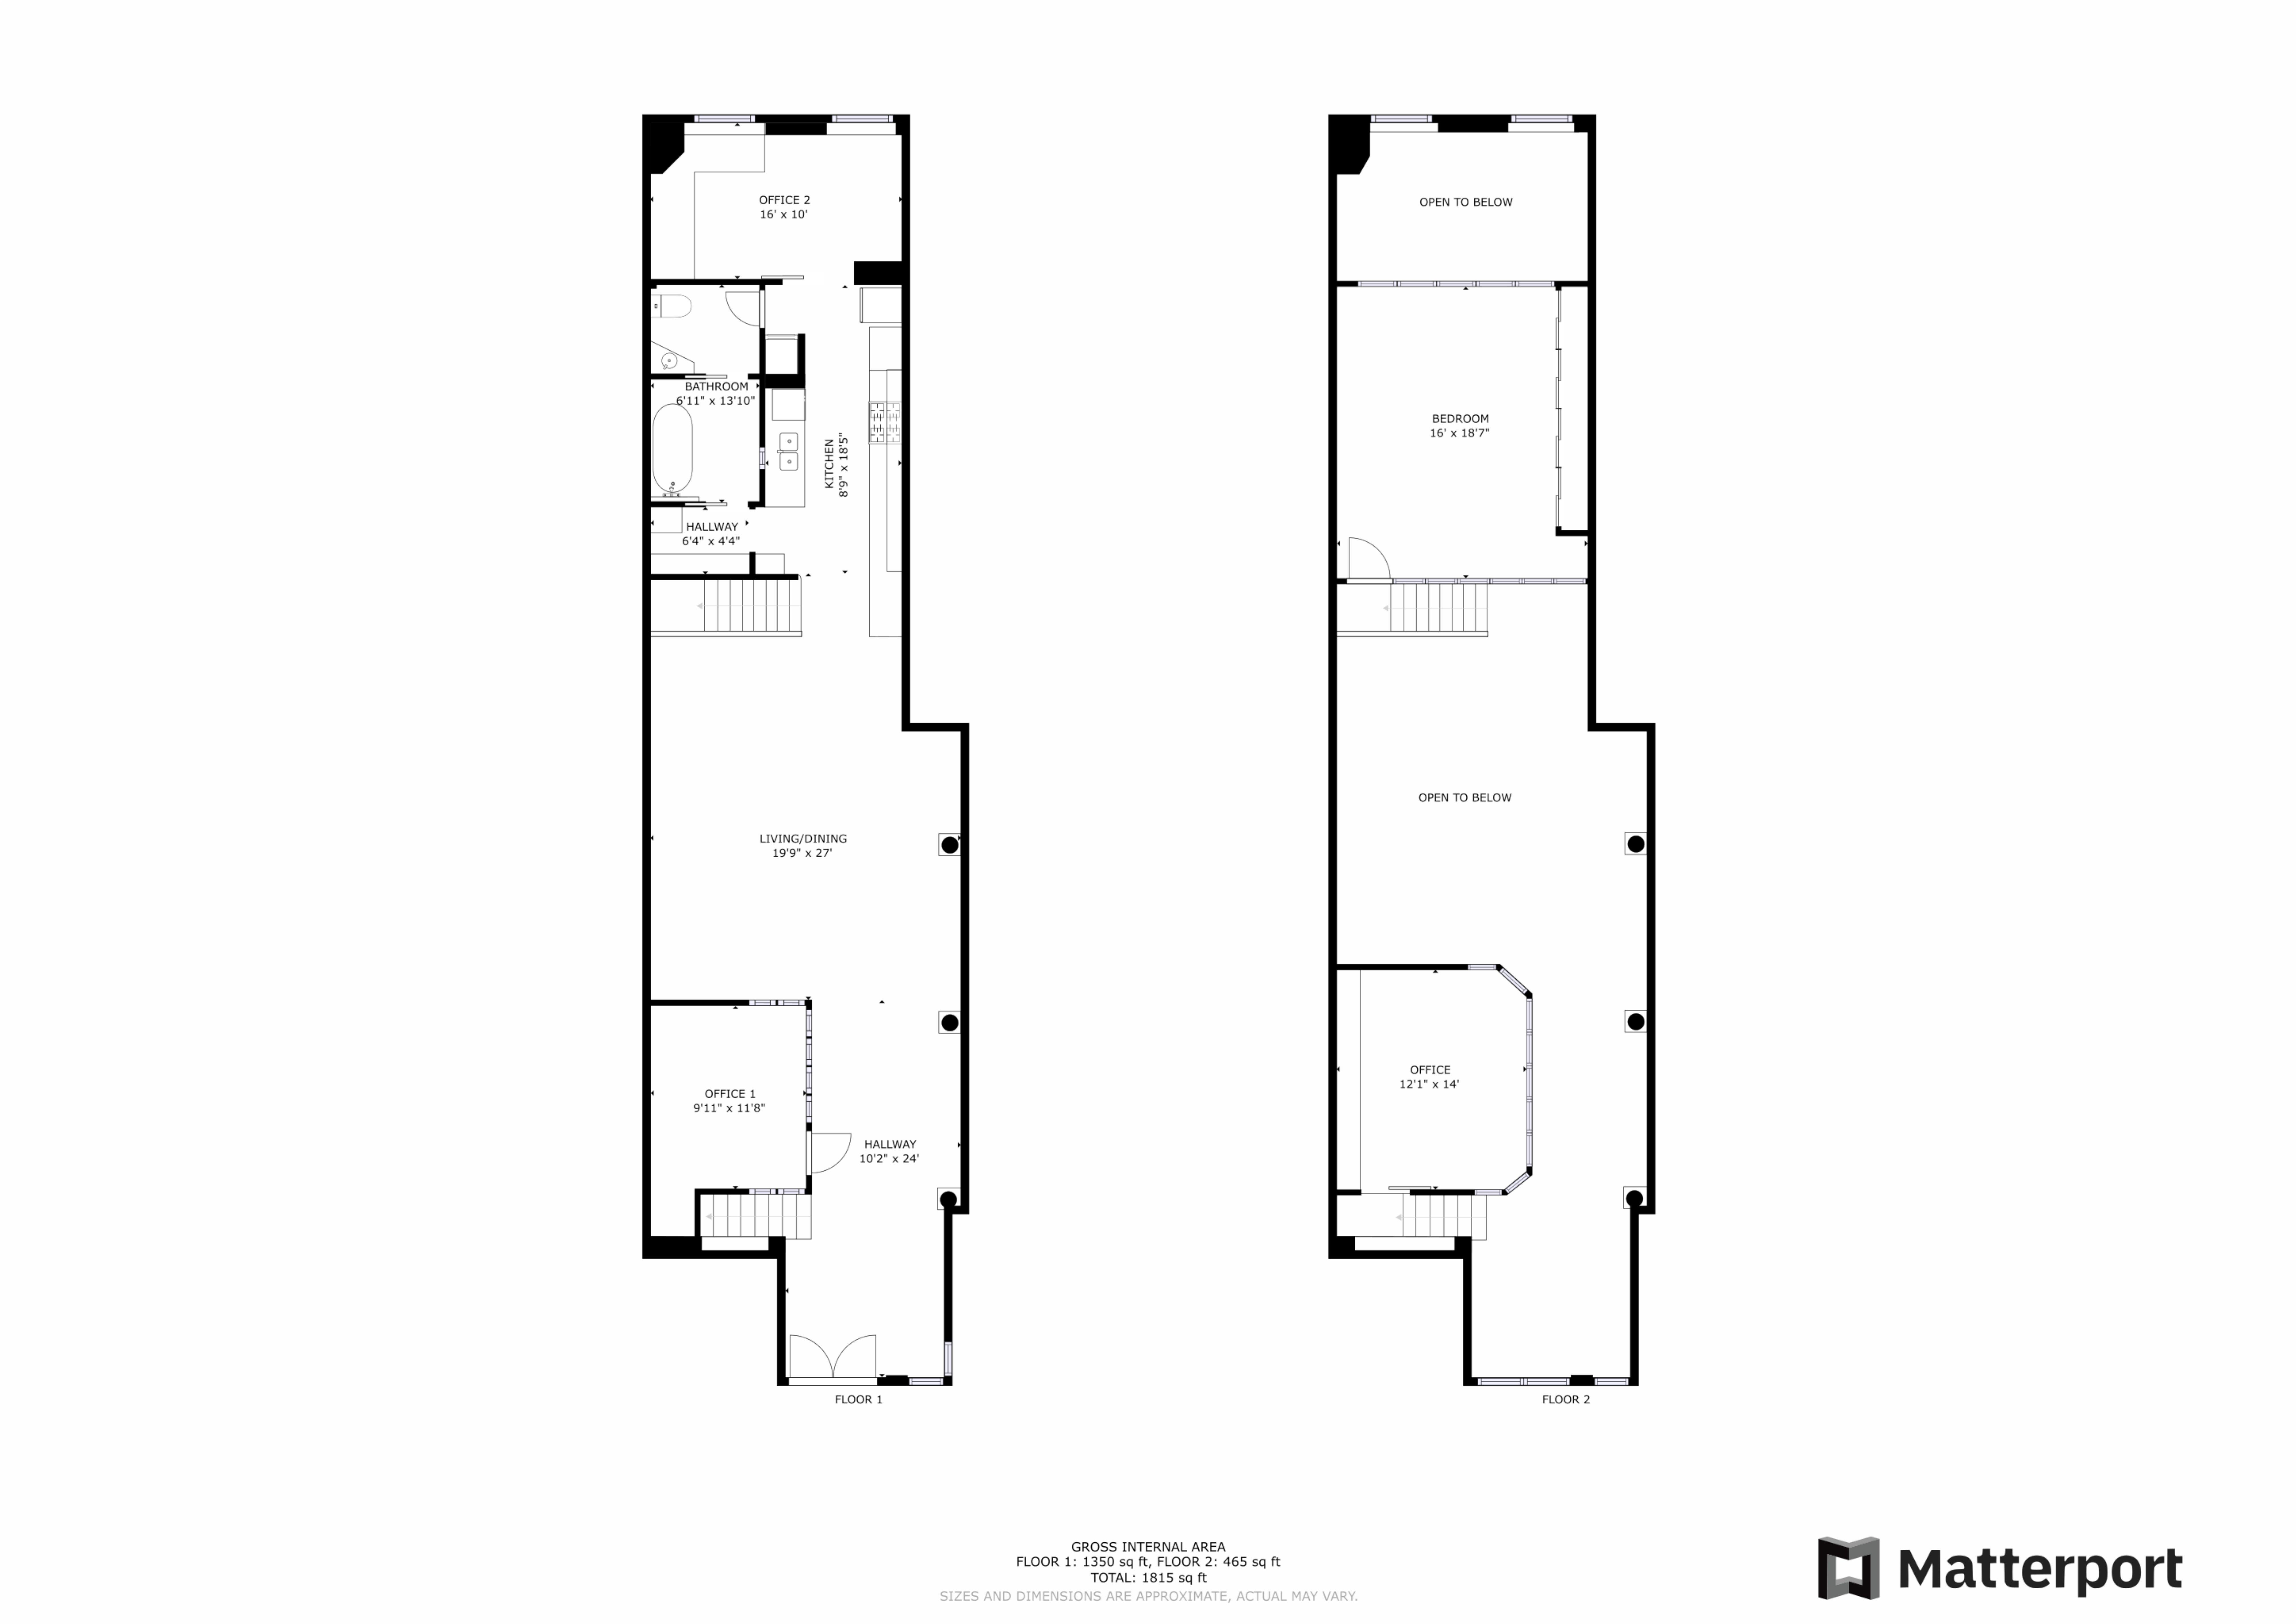 Floorplan for 150 Franklin Street, 1-W